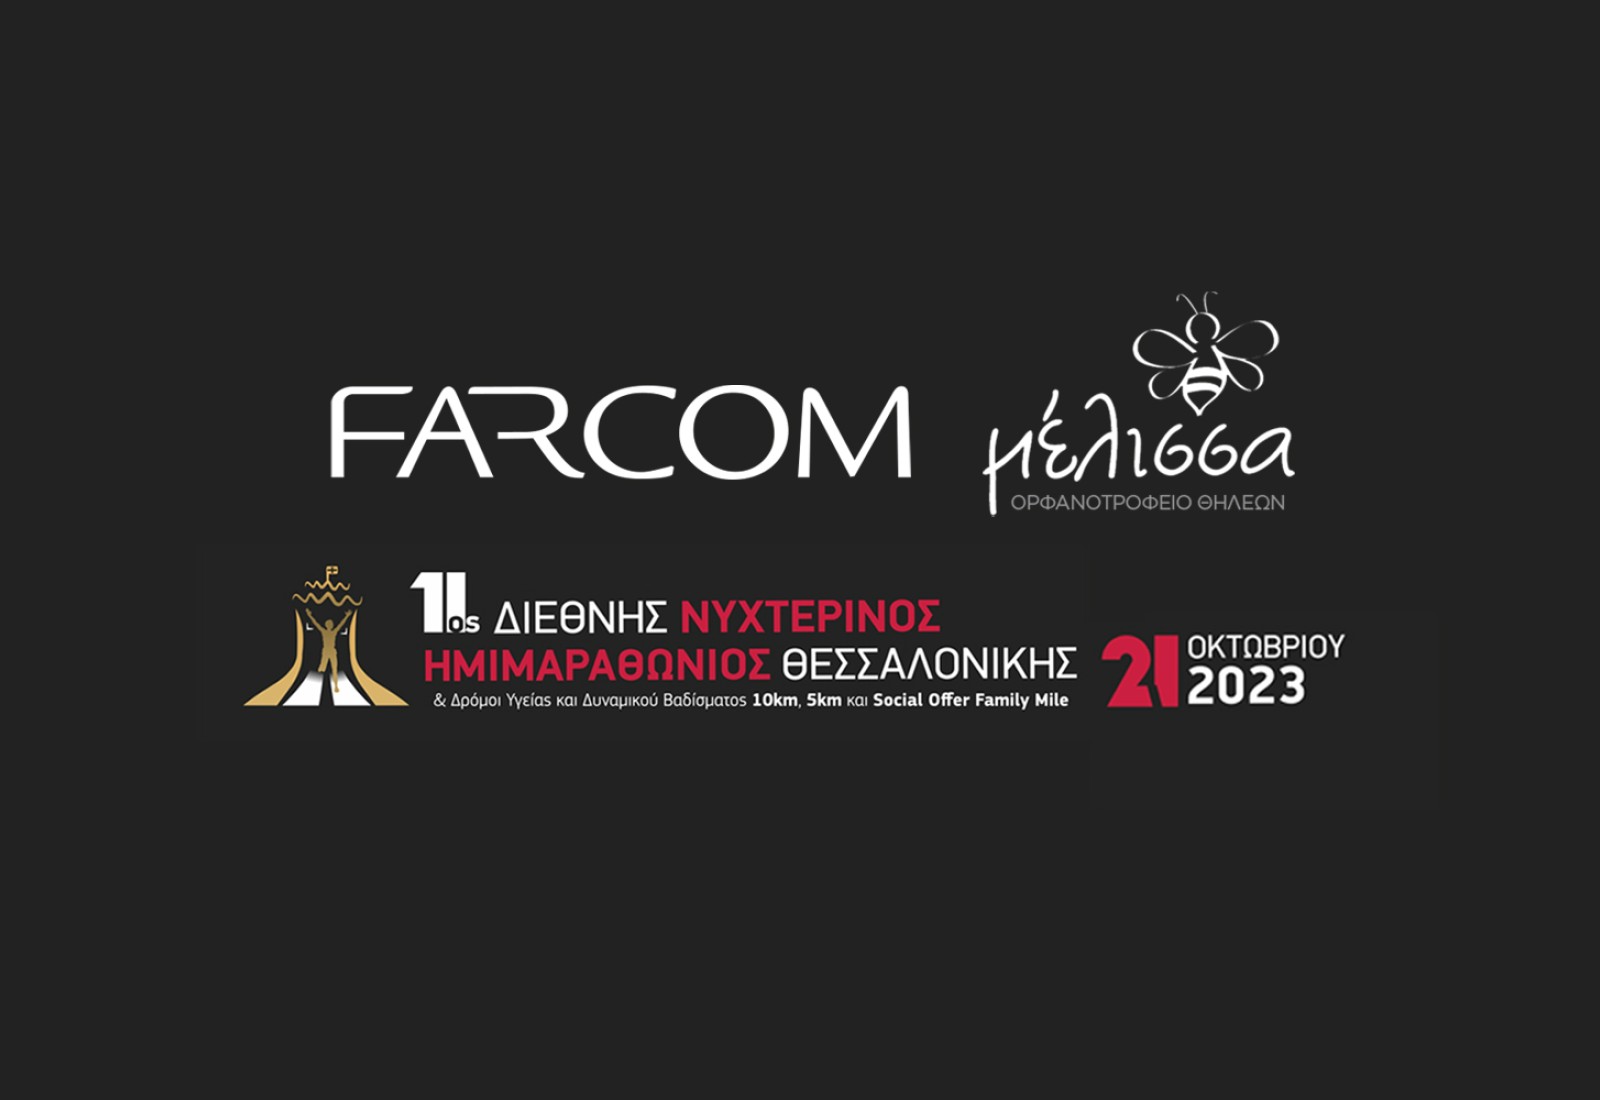 FARCOM ran for a good cause in the 11th Thessaloniki Night Half Marathon.